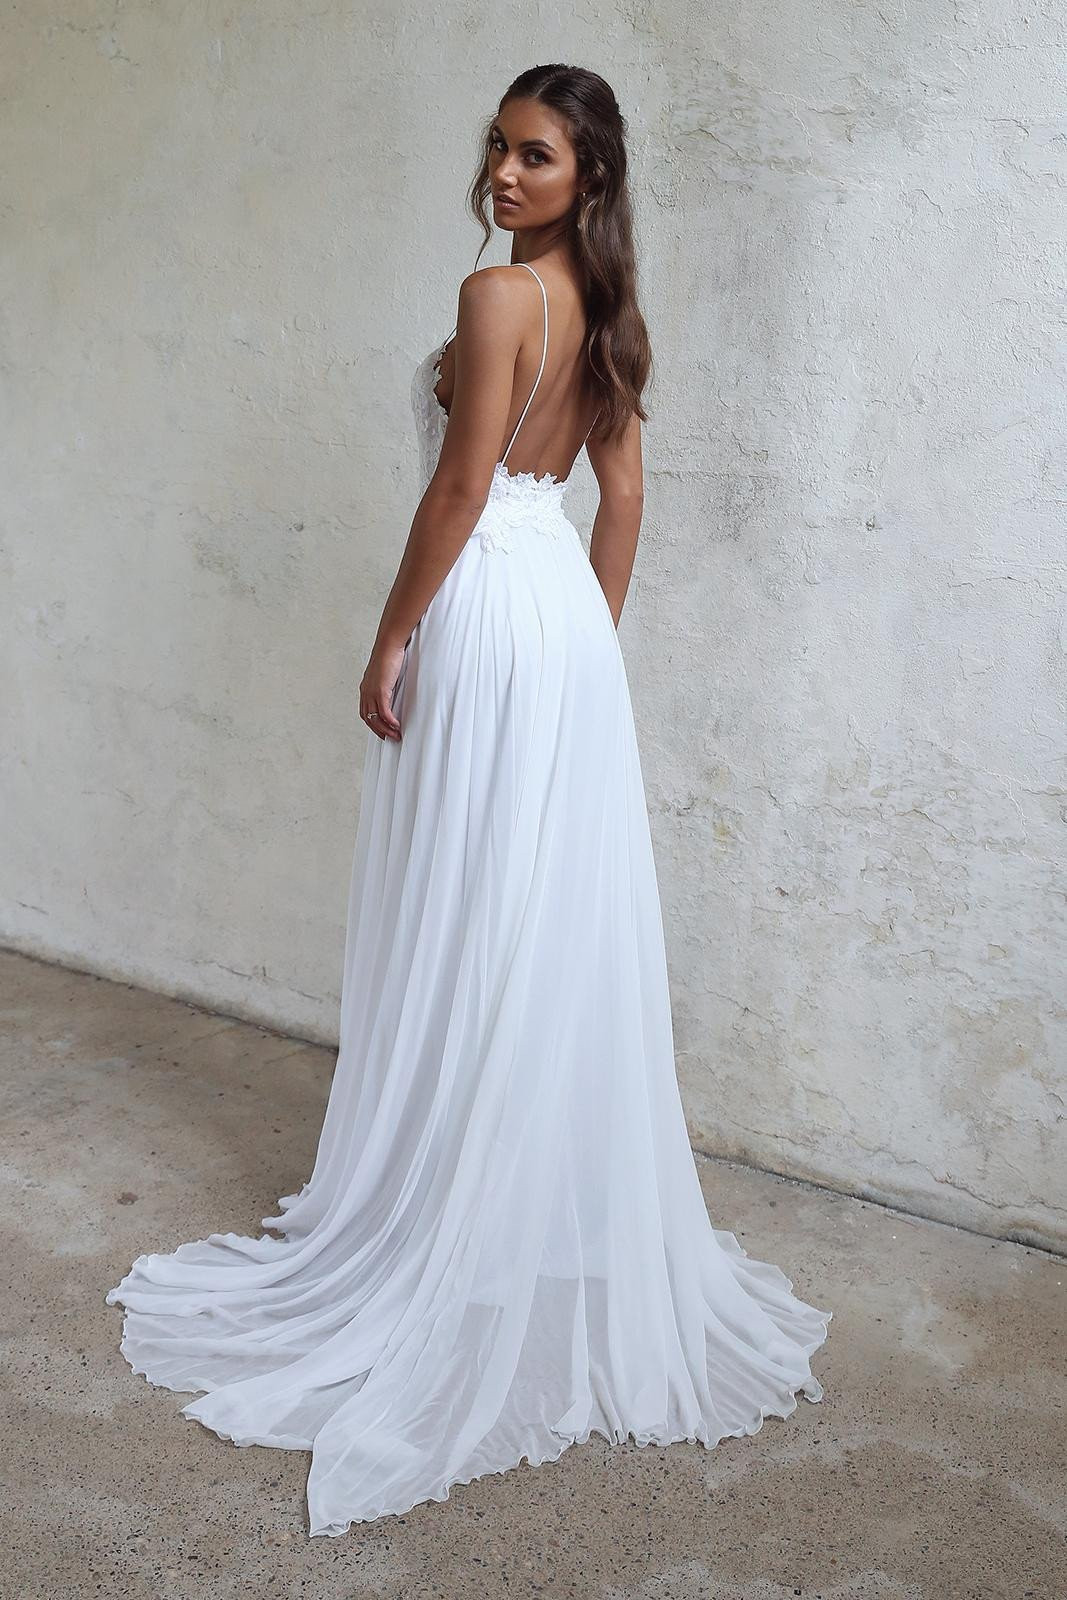 Wedding Dress With Spaghetti Straps
 Sale Absorbing Spaghetti Strap Wedding Dresses White